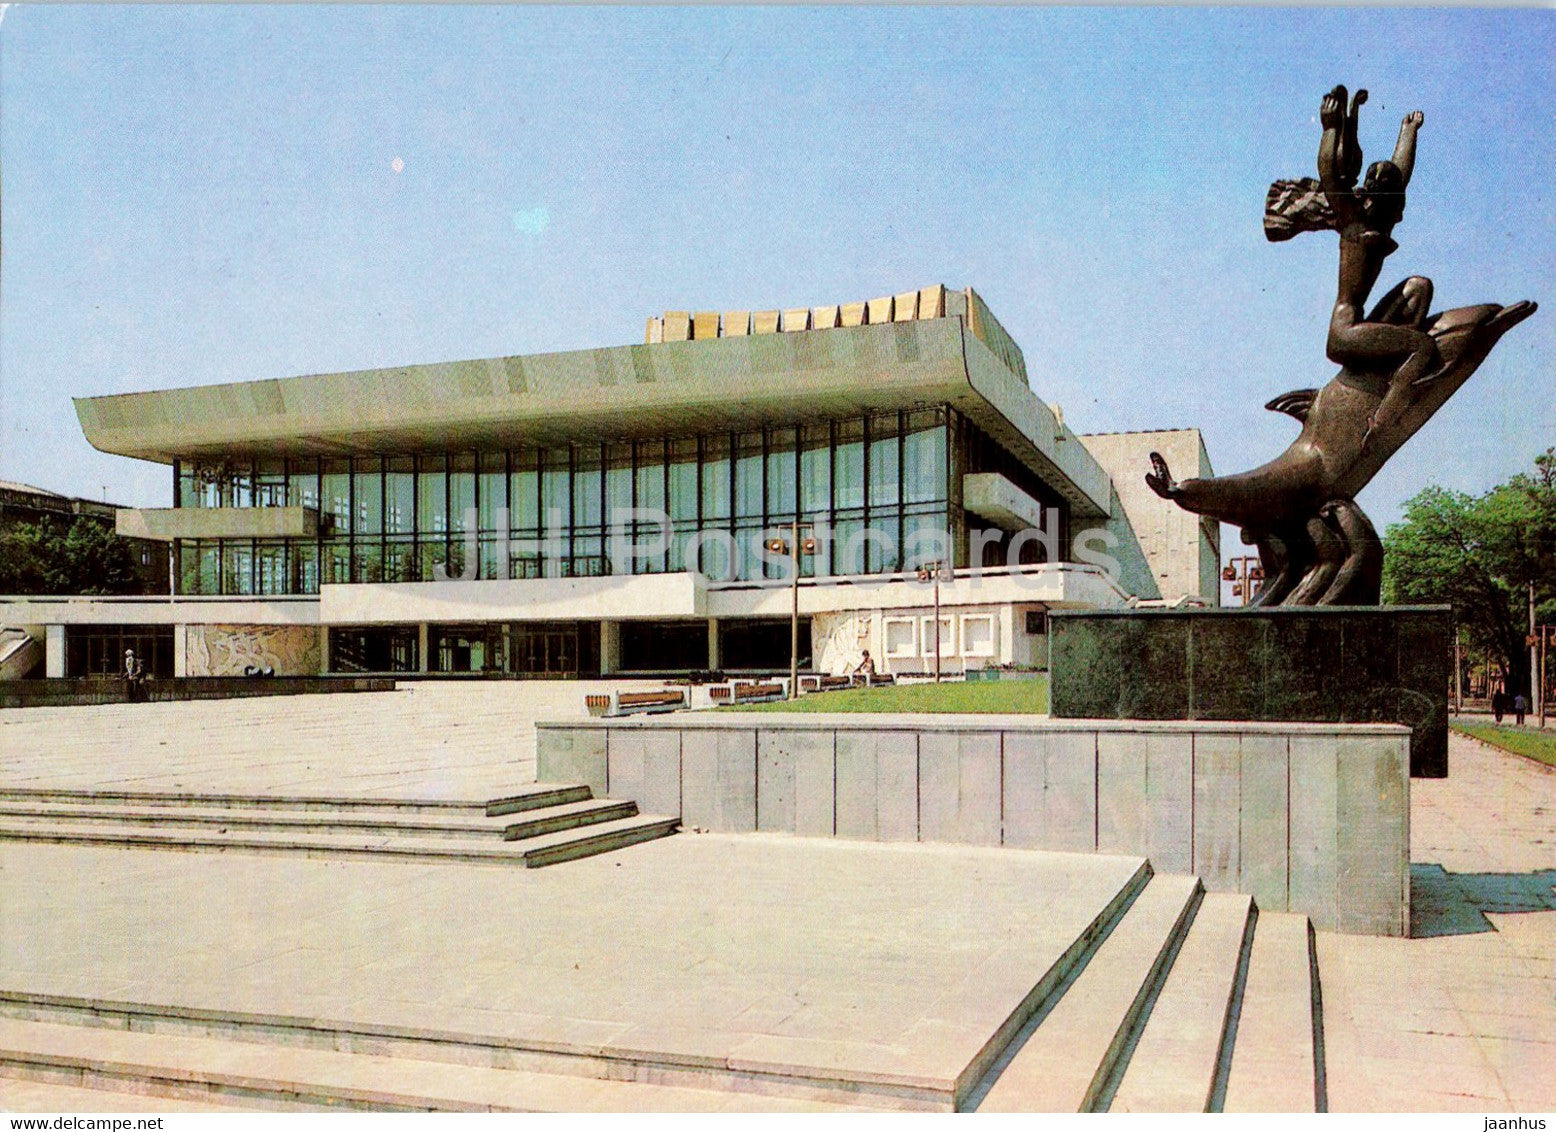 Odessa - Theatre of Musical Comedy - postal stationery - 1983 - Ukraine USSR - unused - JH Postcards